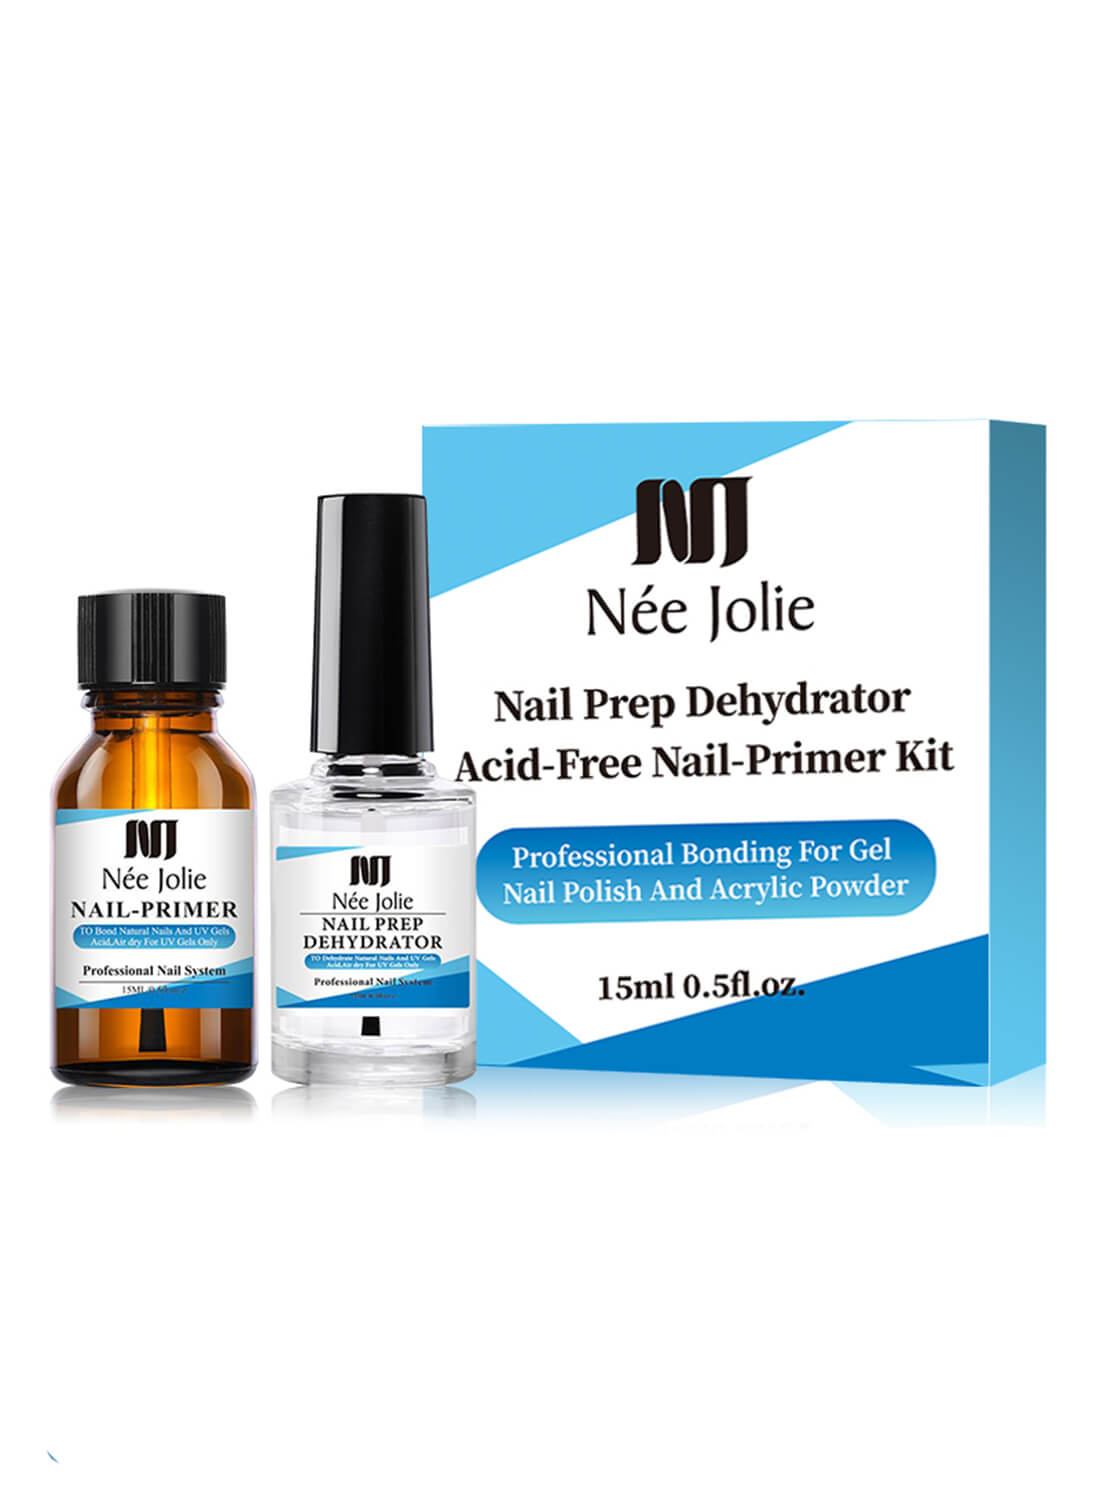 Nee Jolie Nail Prep Dehydrator and Nail Primer Set